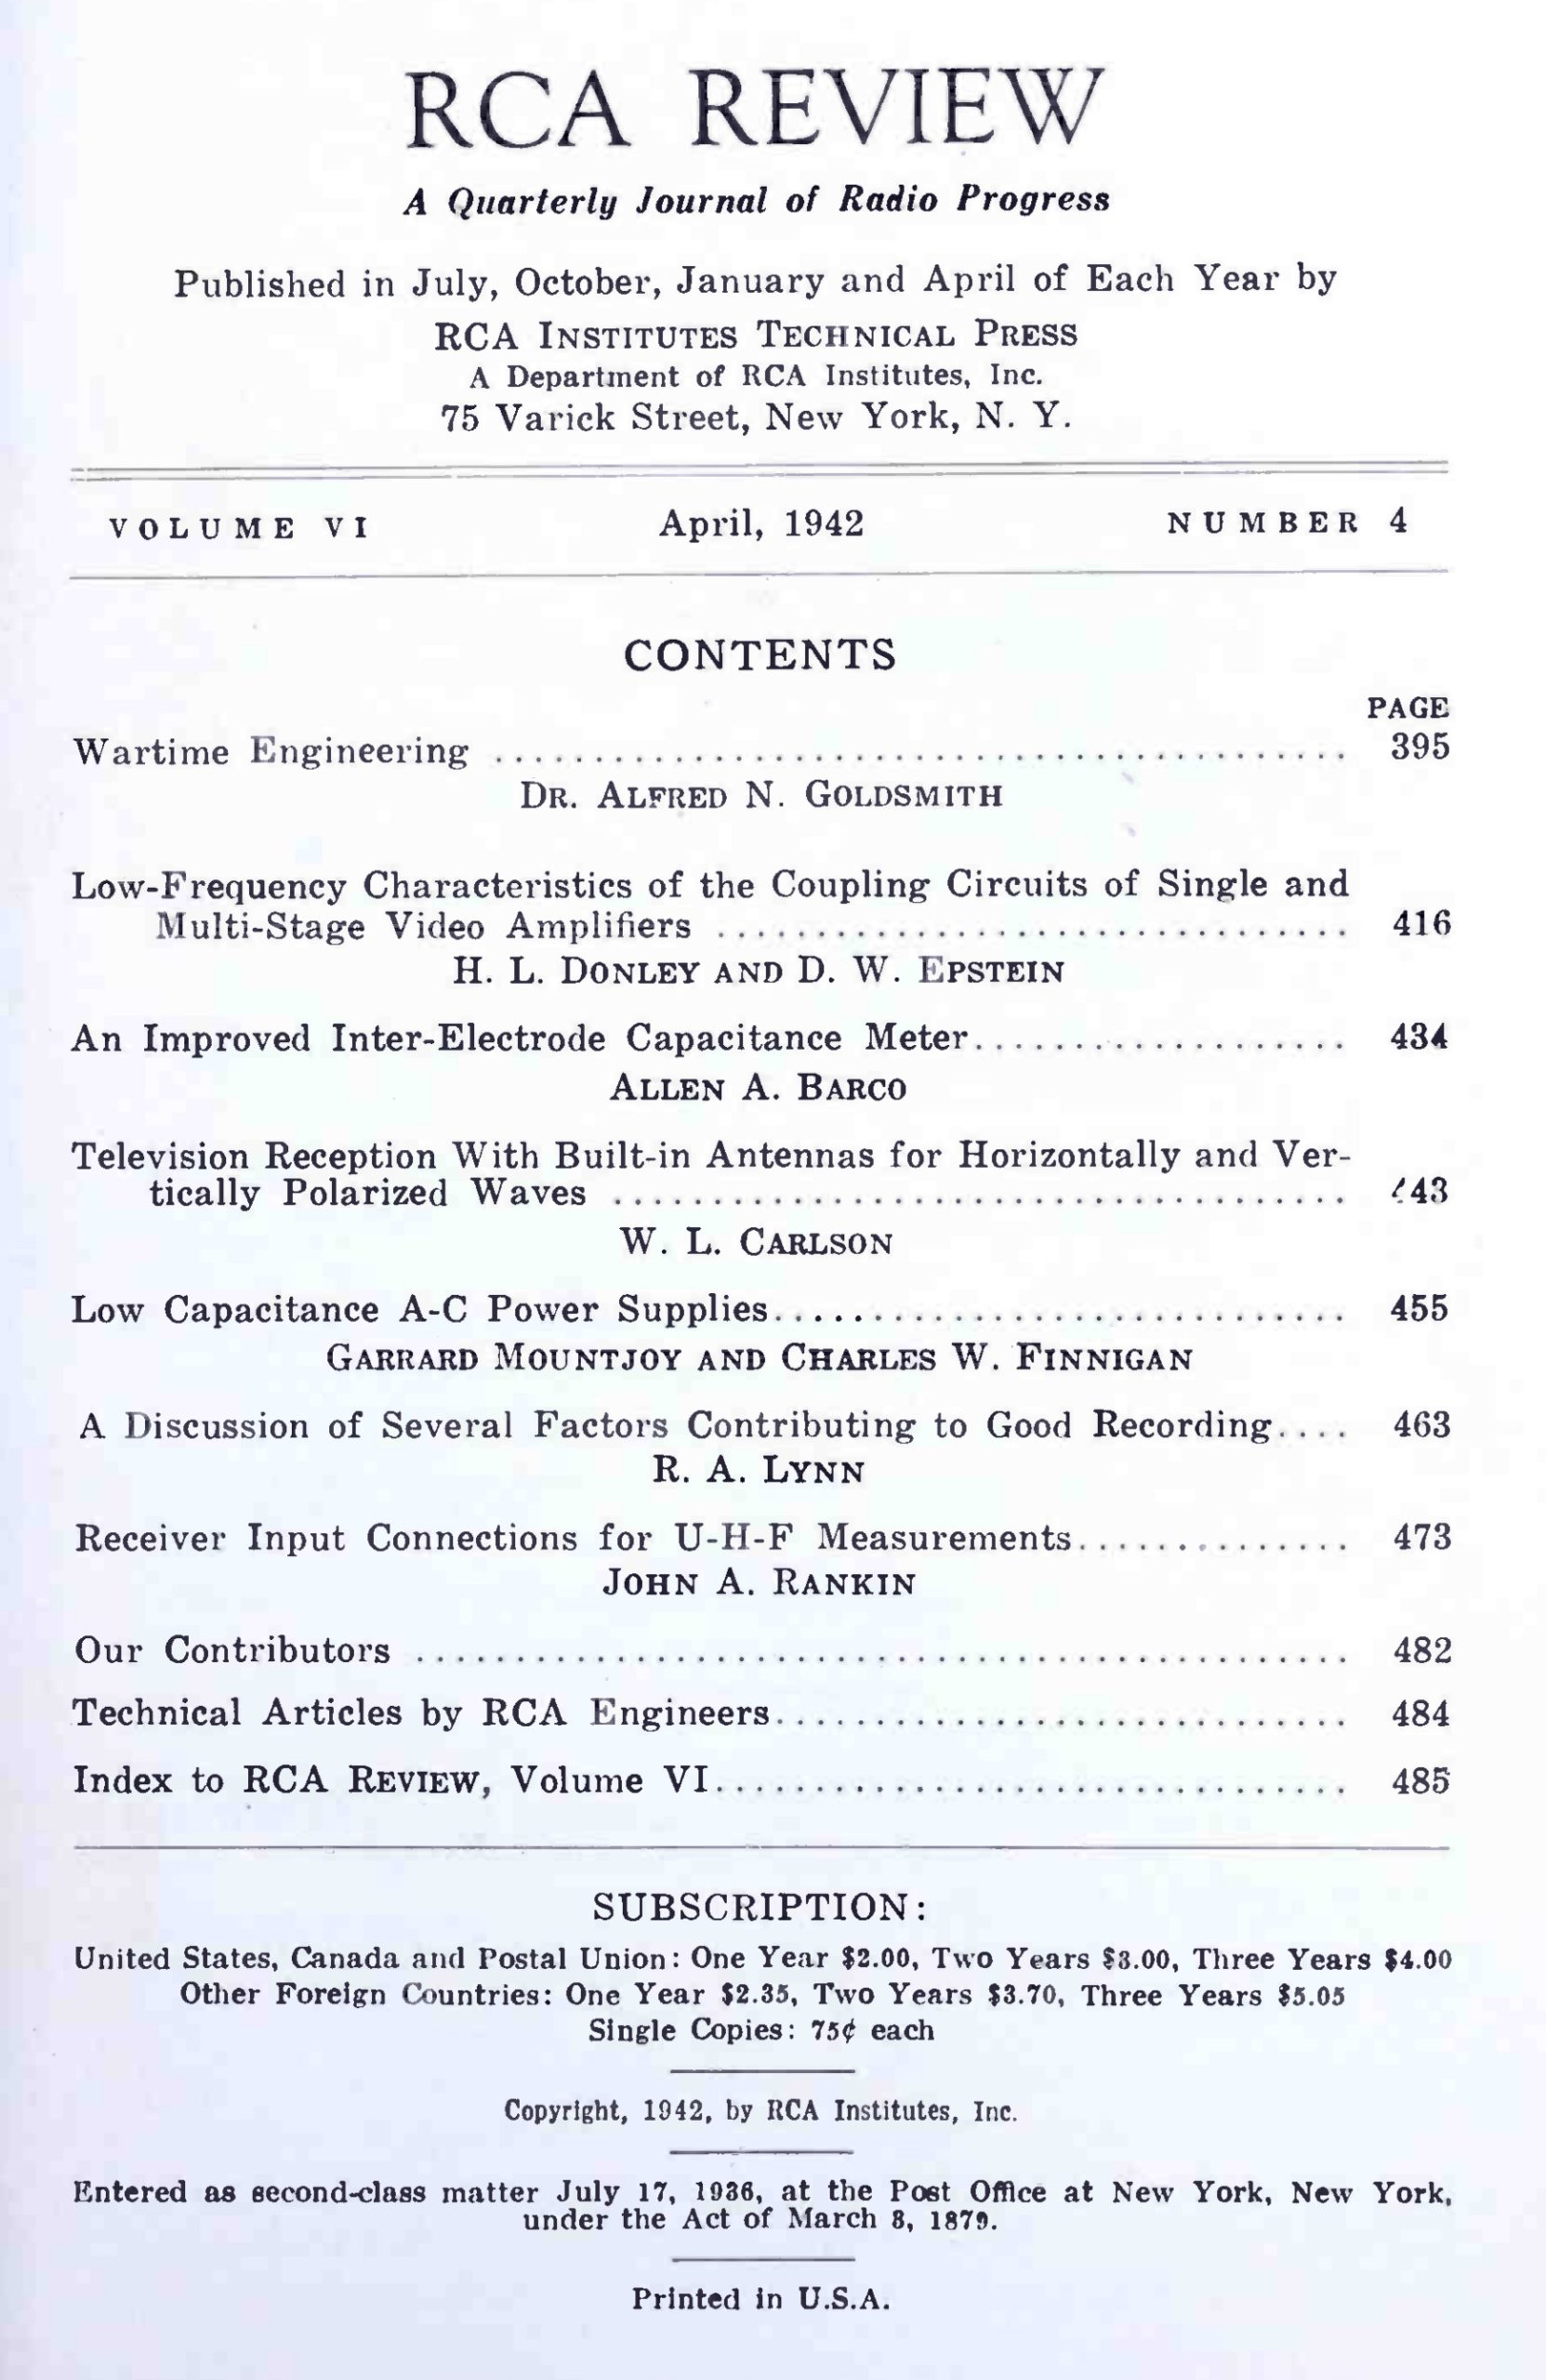 RCA Review, Volume VI, No. 4, April 1942